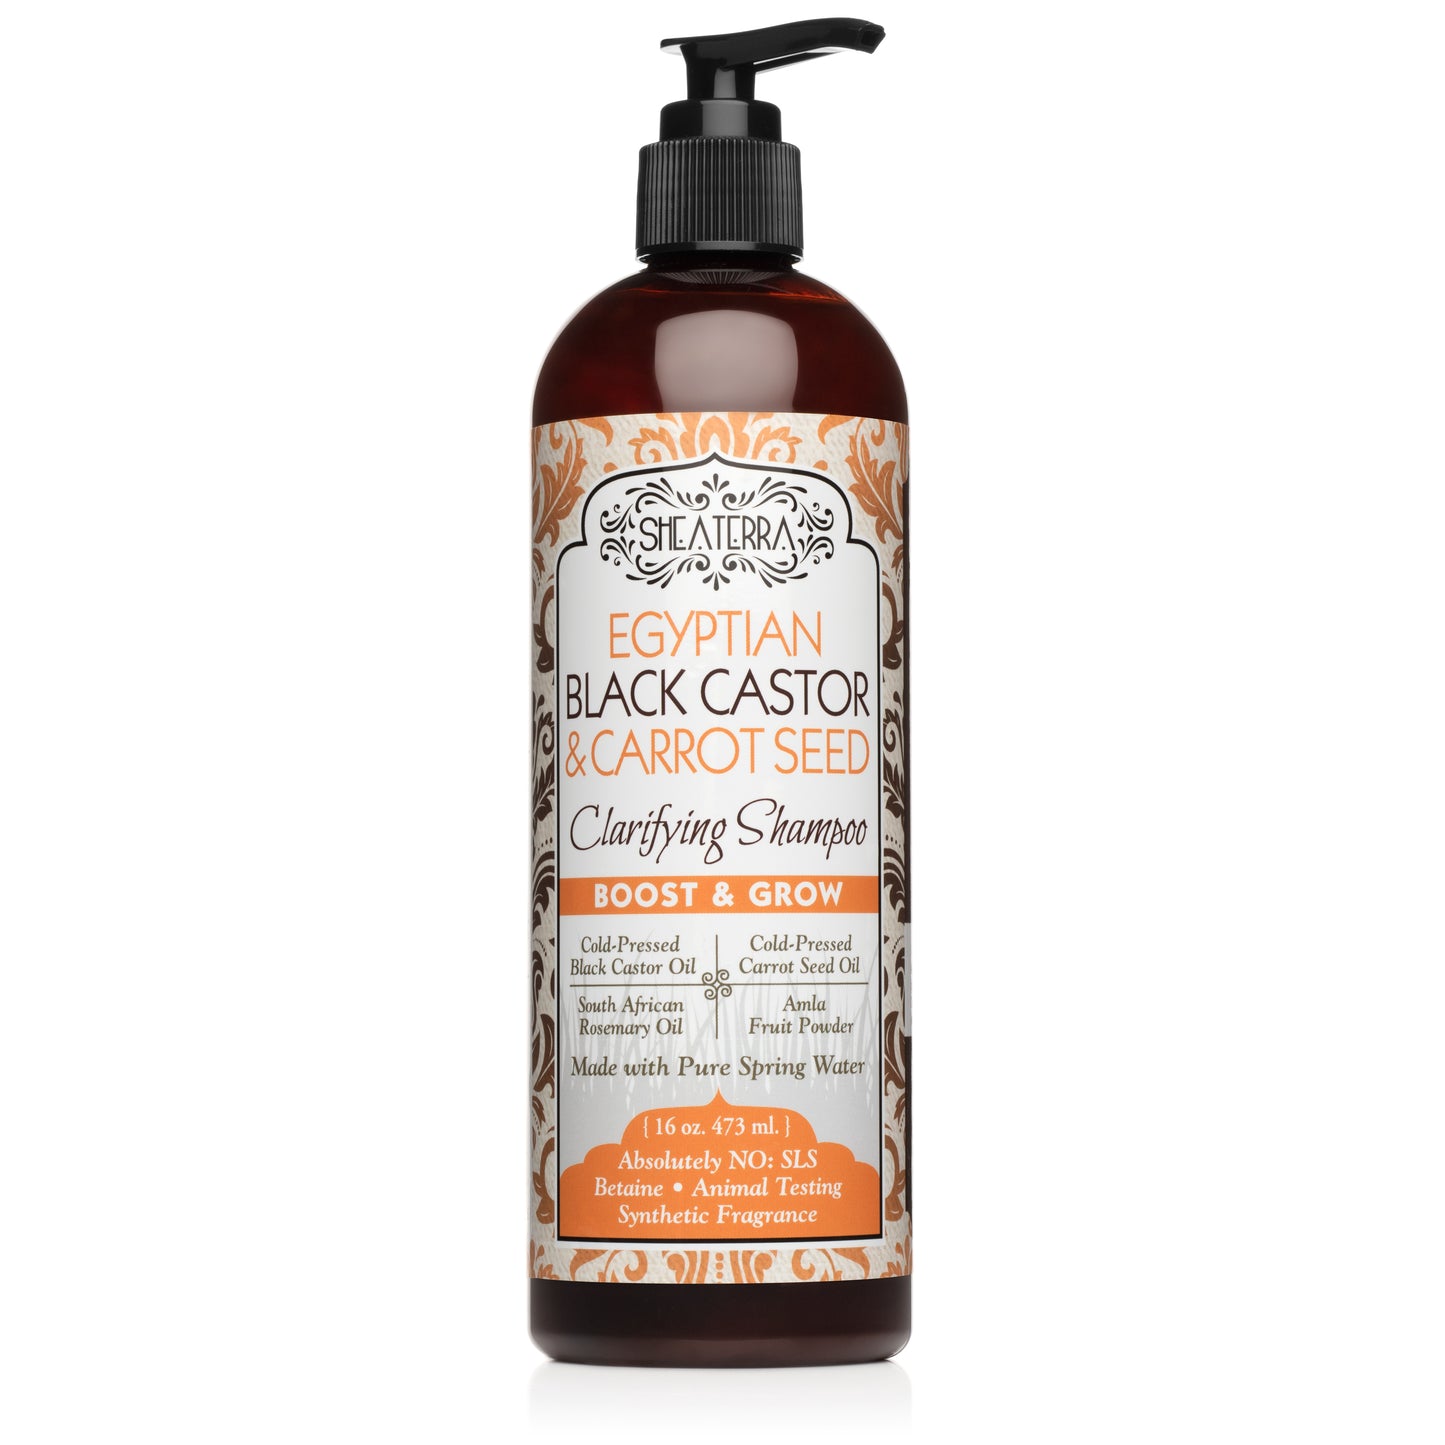 Egyptian Black Castor & Carrot Seed Clarifying Shampoo (BOOST & GROW)